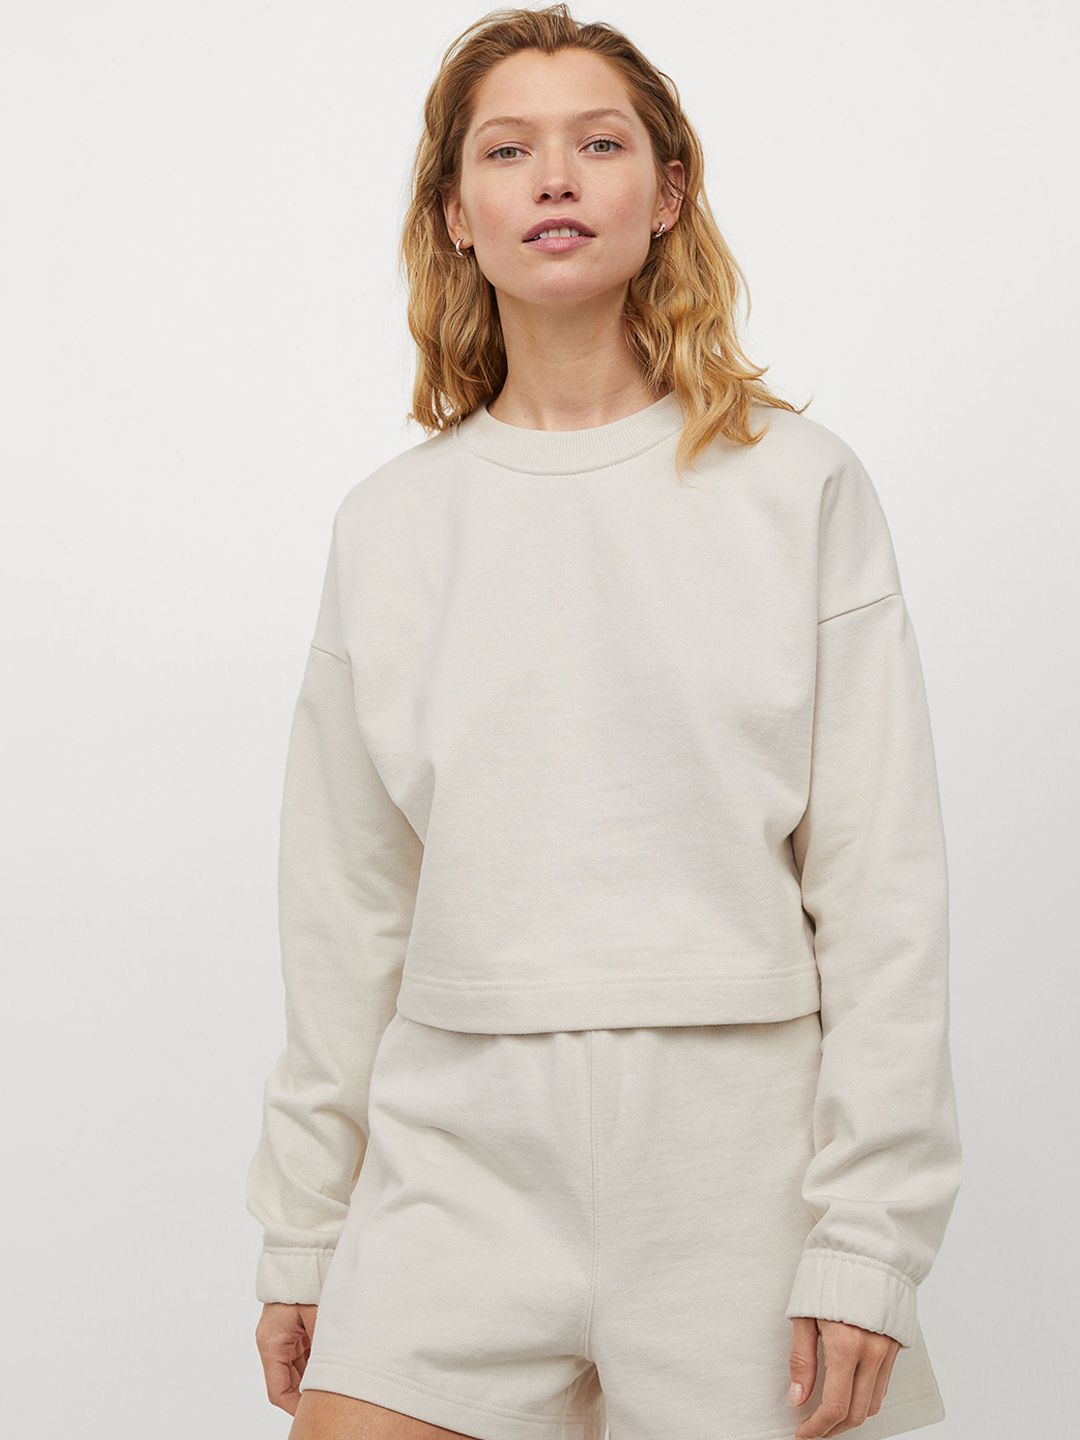 H&M Woman Beige Cropped sweatshirt Price in India